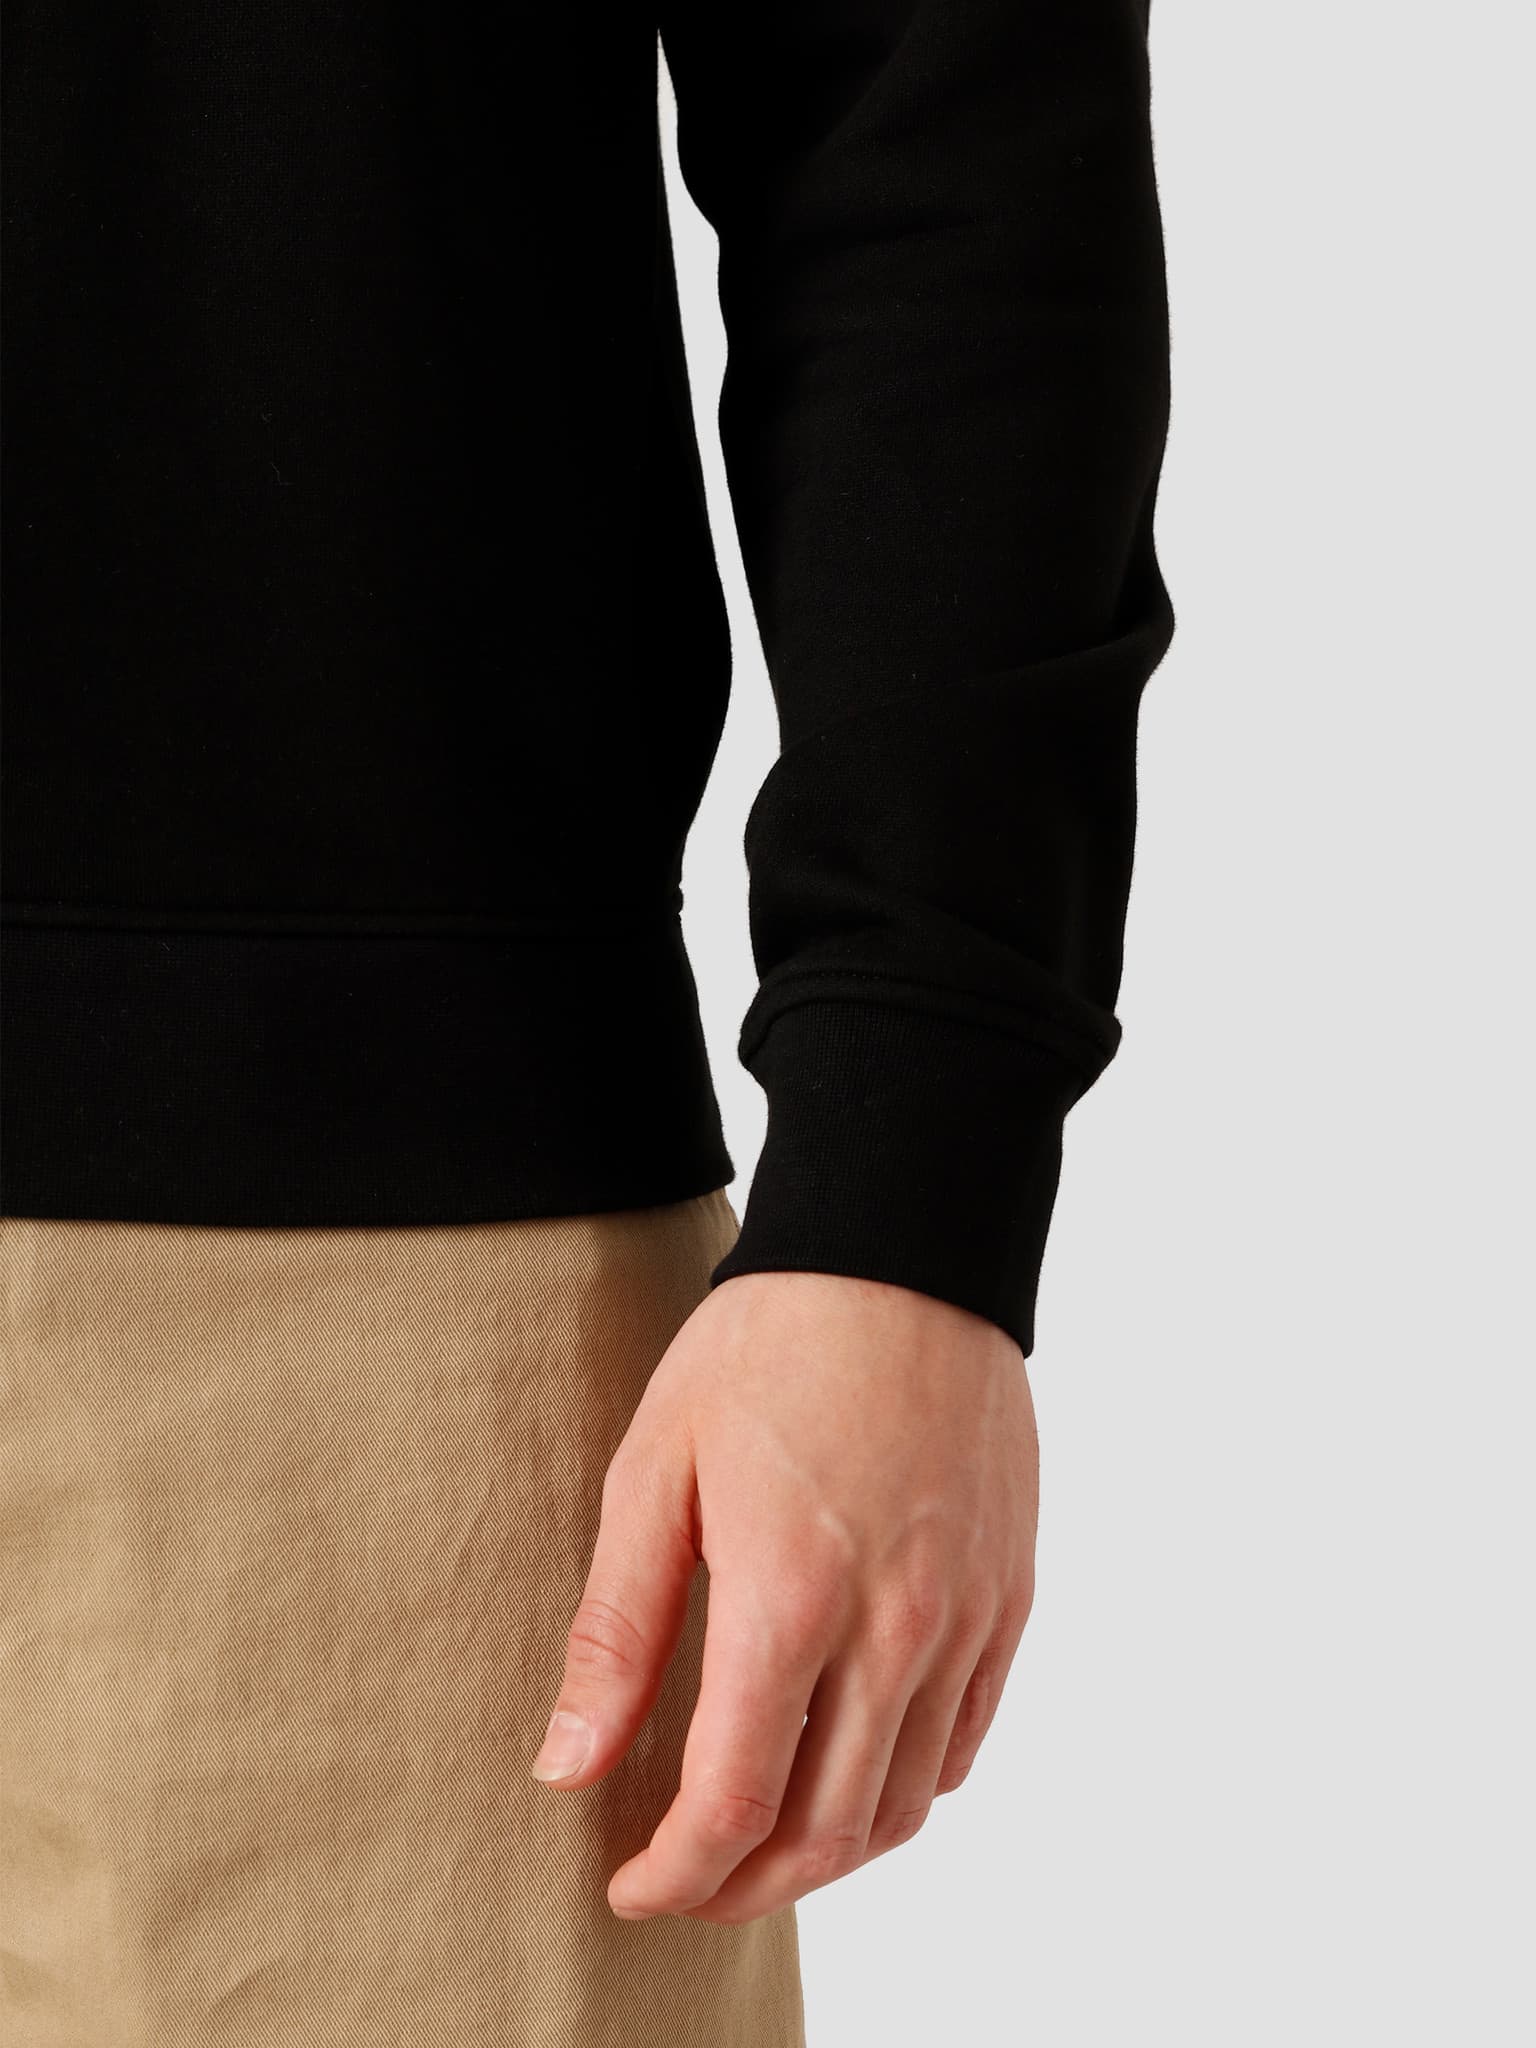 1HS1 Sweatshirt Black SH7613-93